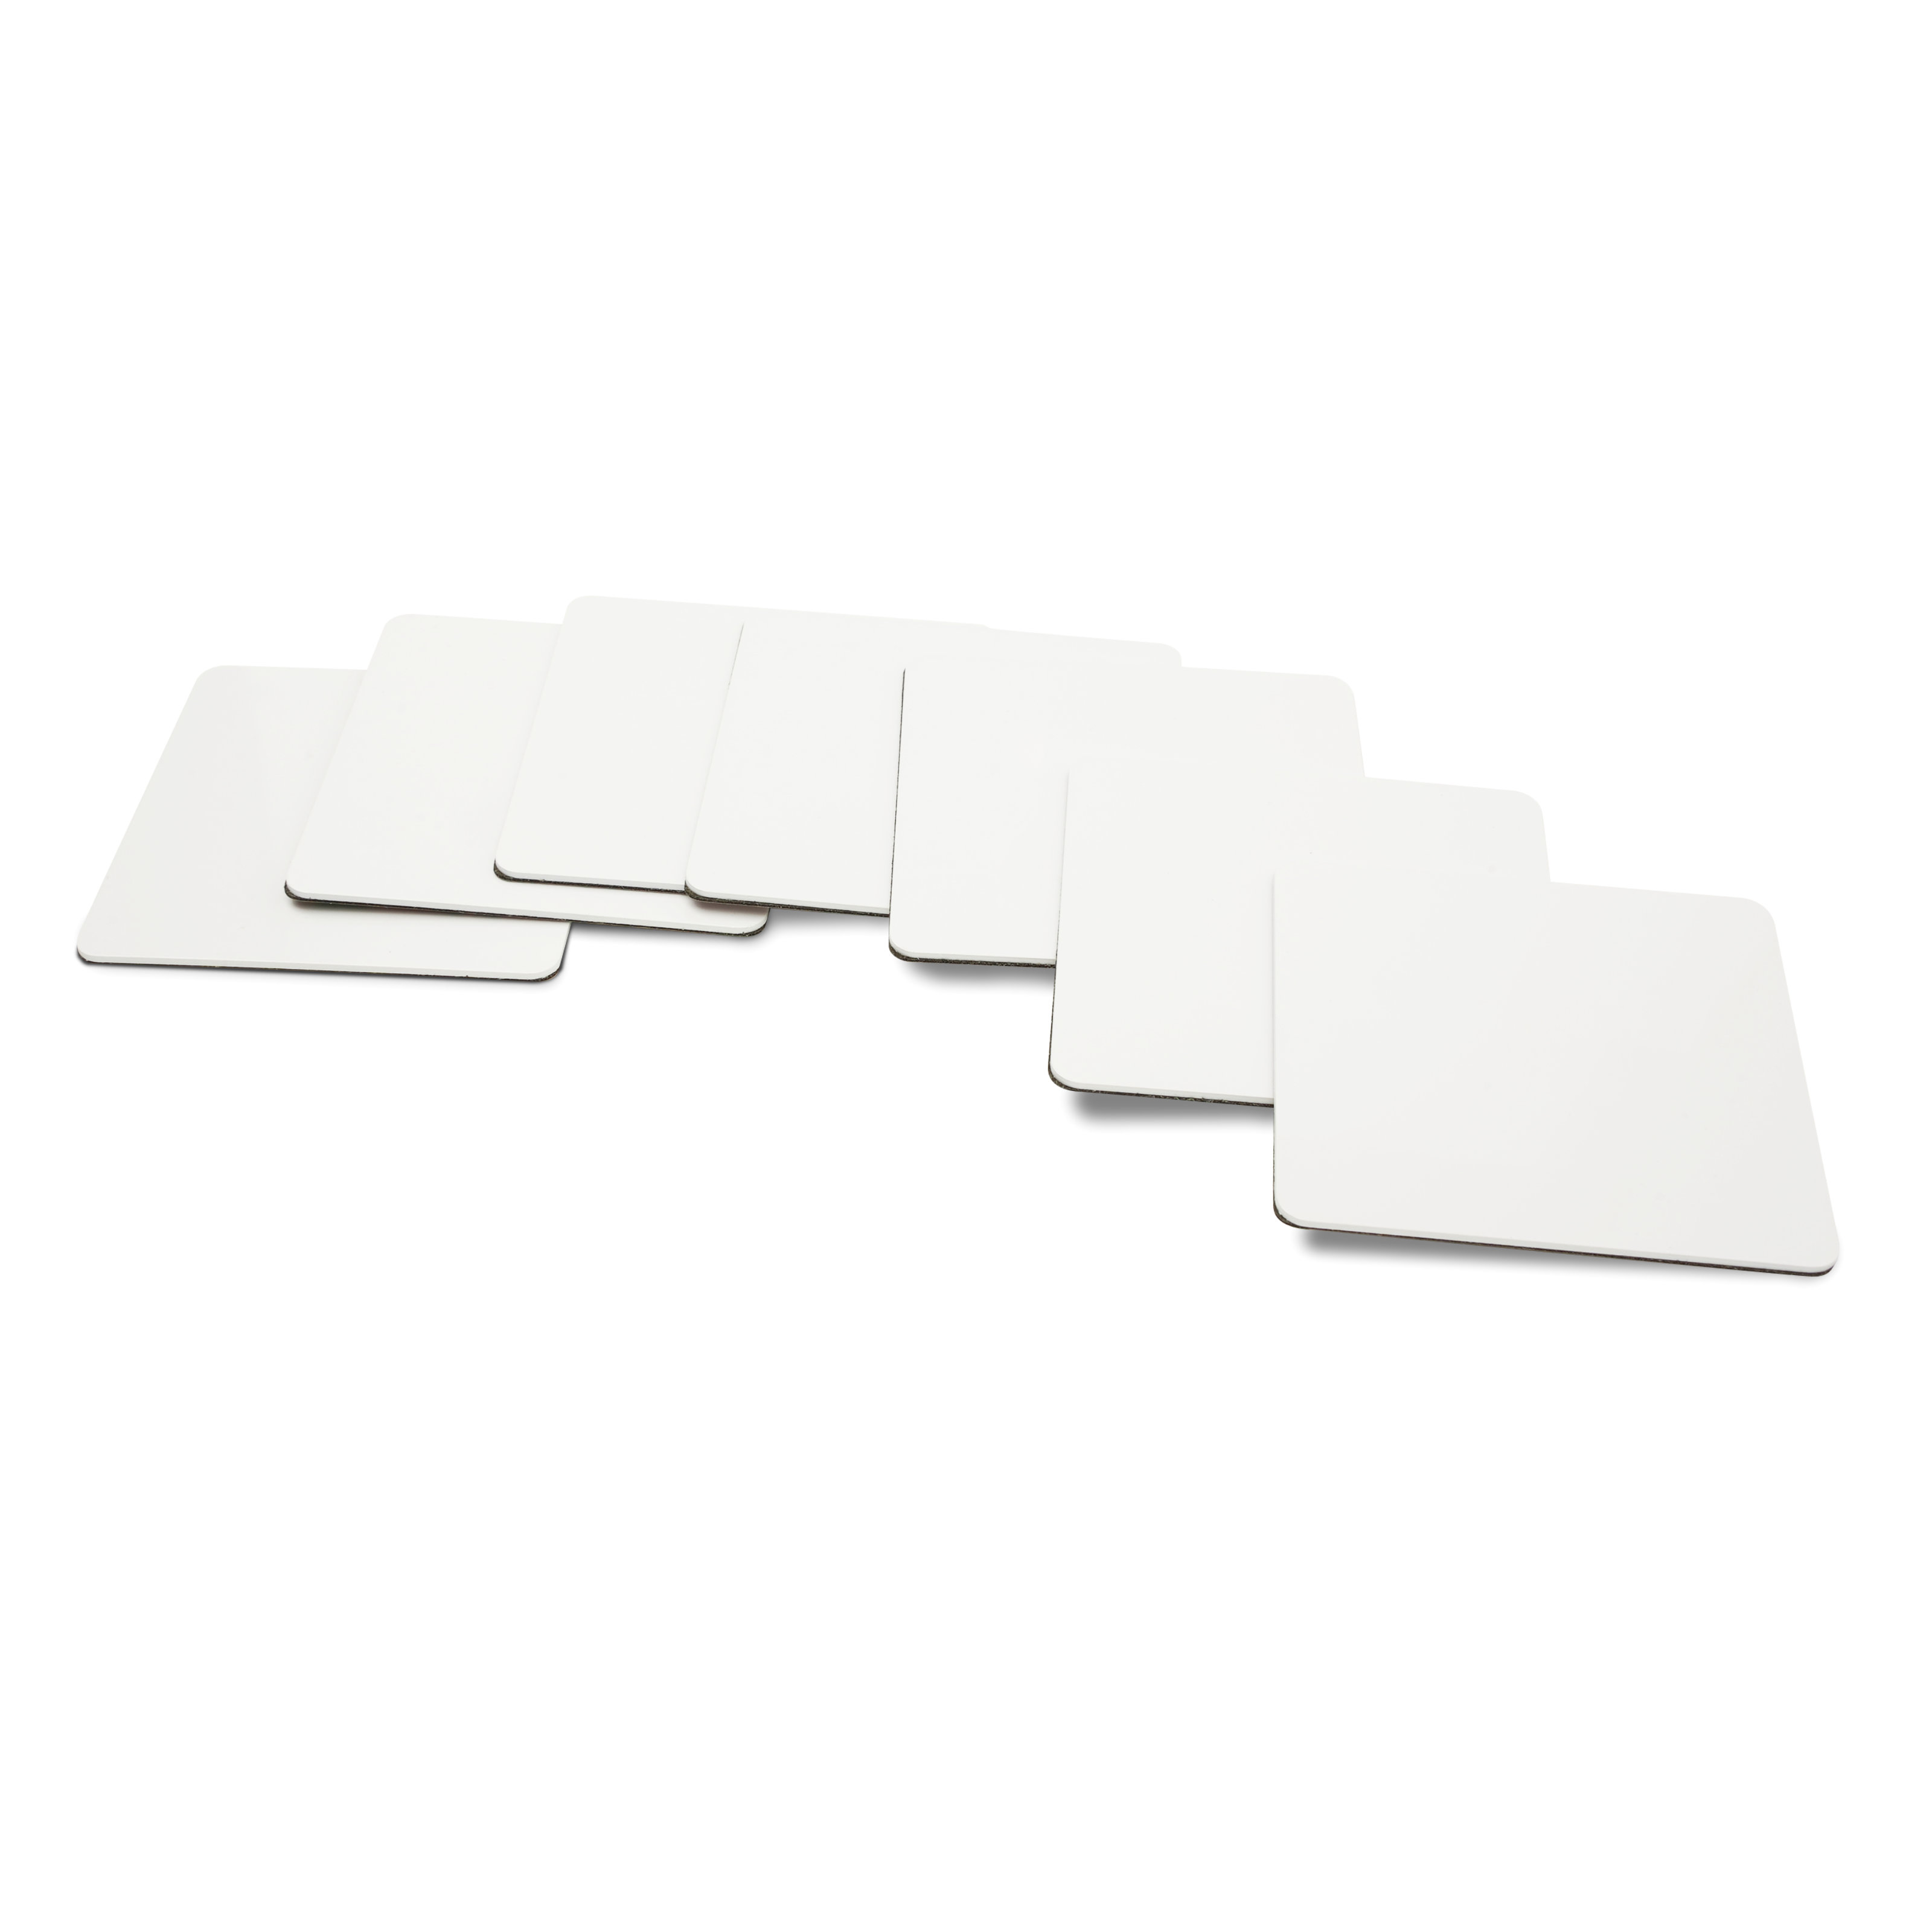 NFC Sticker PVC - 30 x 30 mm - NTAG213 - 180 Byte - weiß